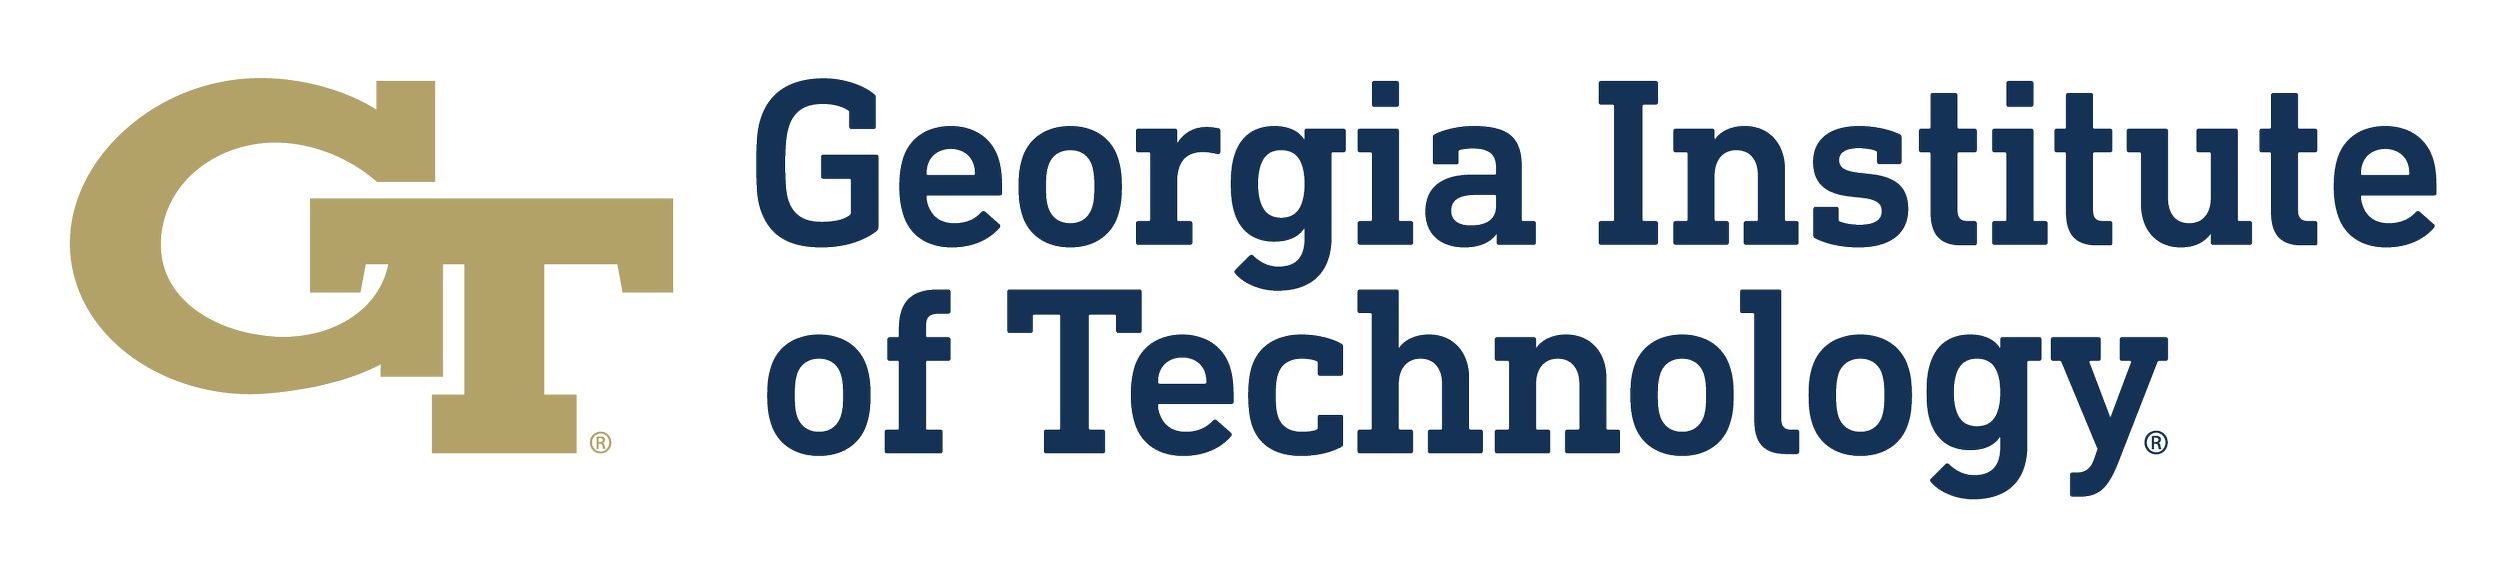 georgia tech.png